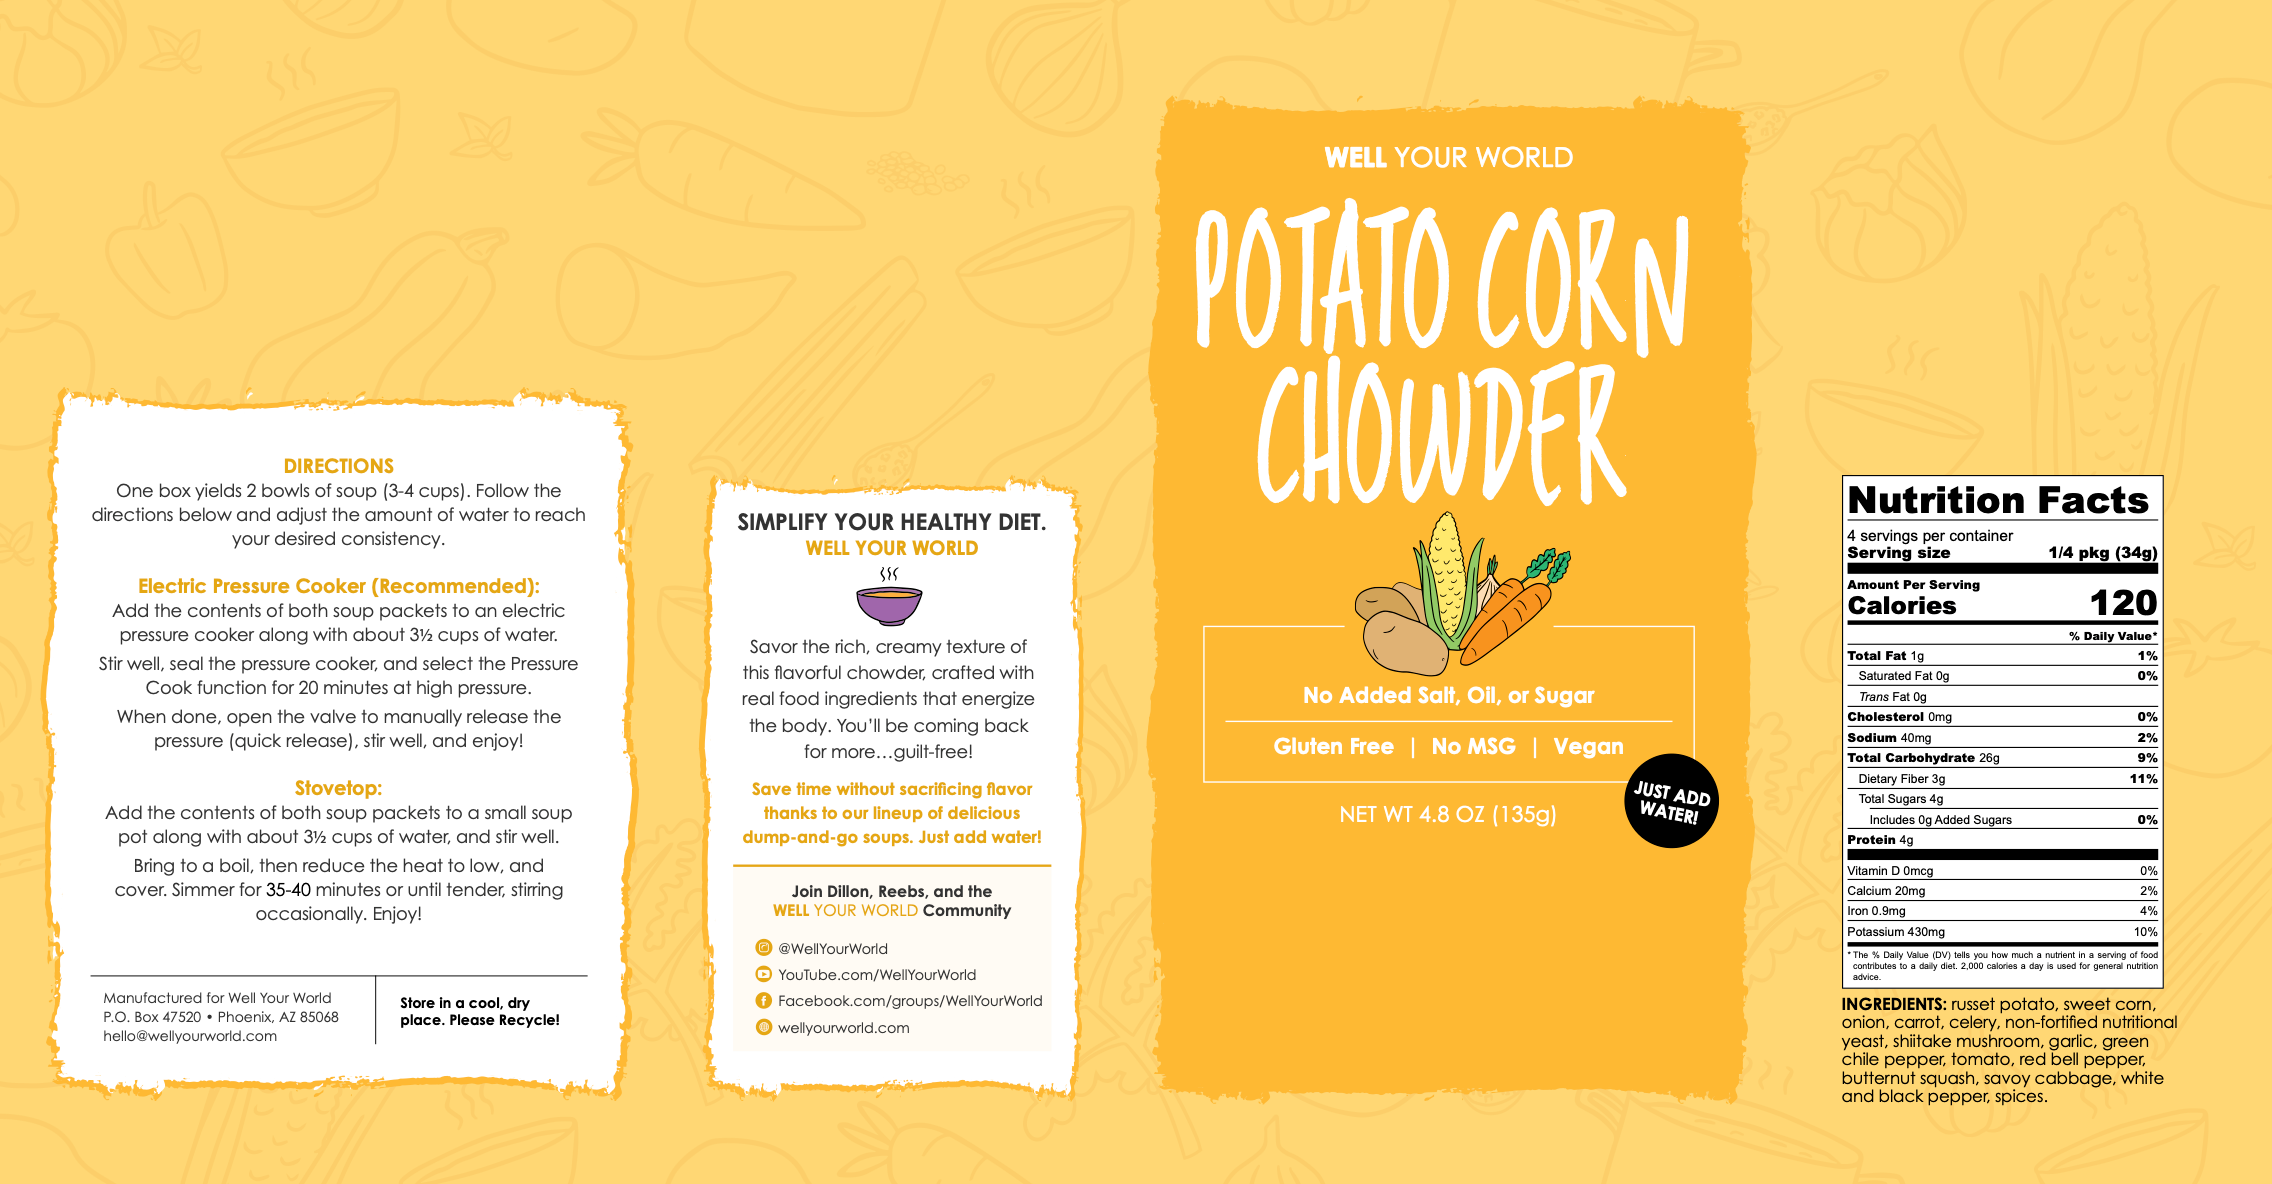 NEW Potato Corn Chowder